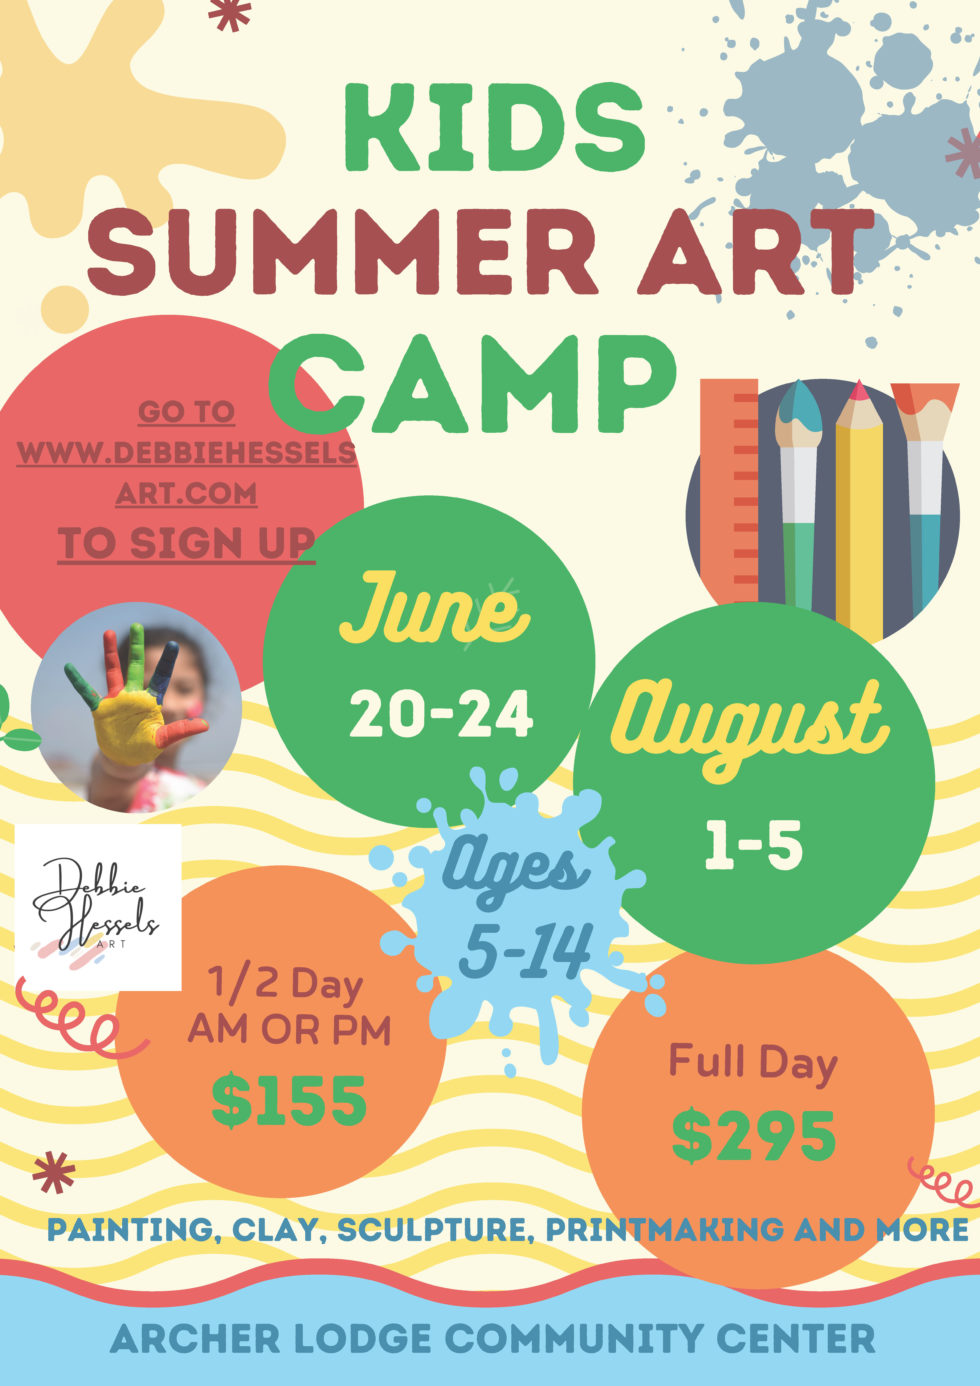 Kids Summer Art Camp Archer Lodge Community Center